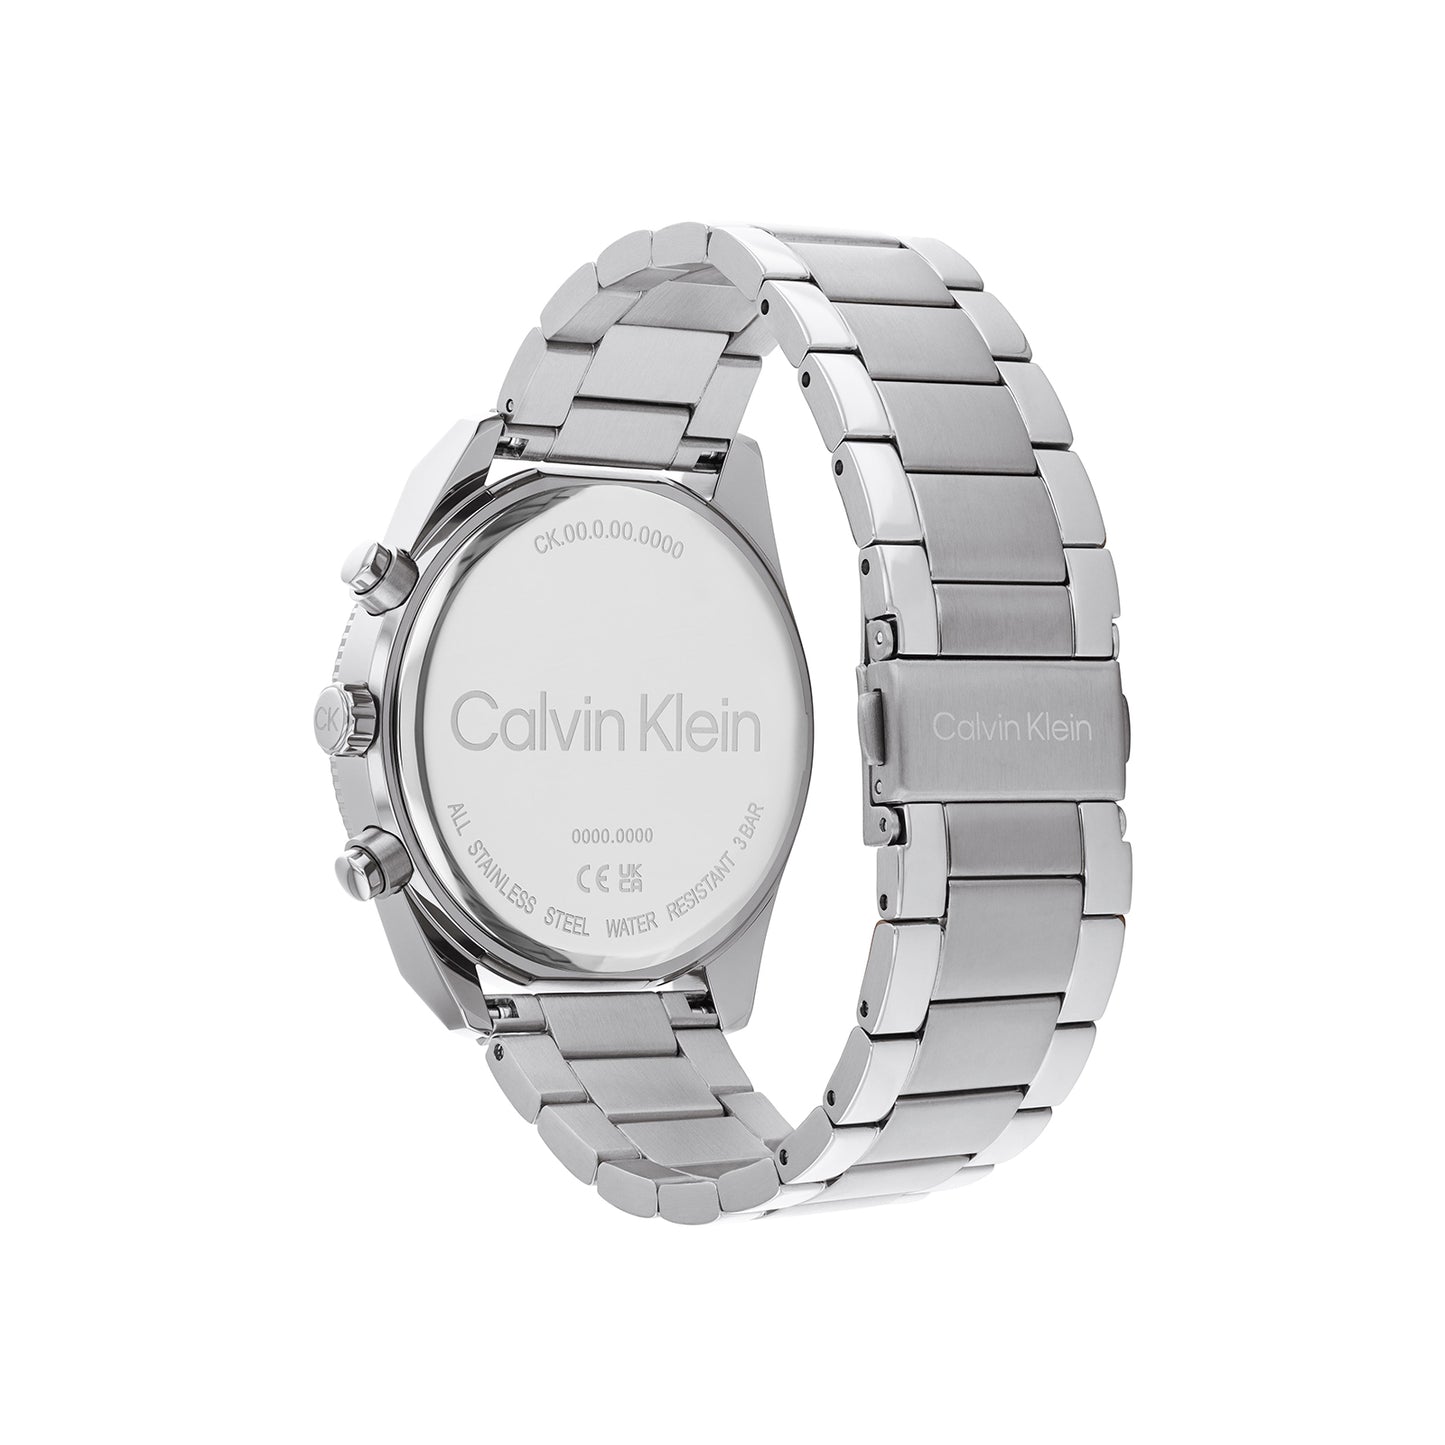 Calvin Klein 25200356 Men's Steel Watch